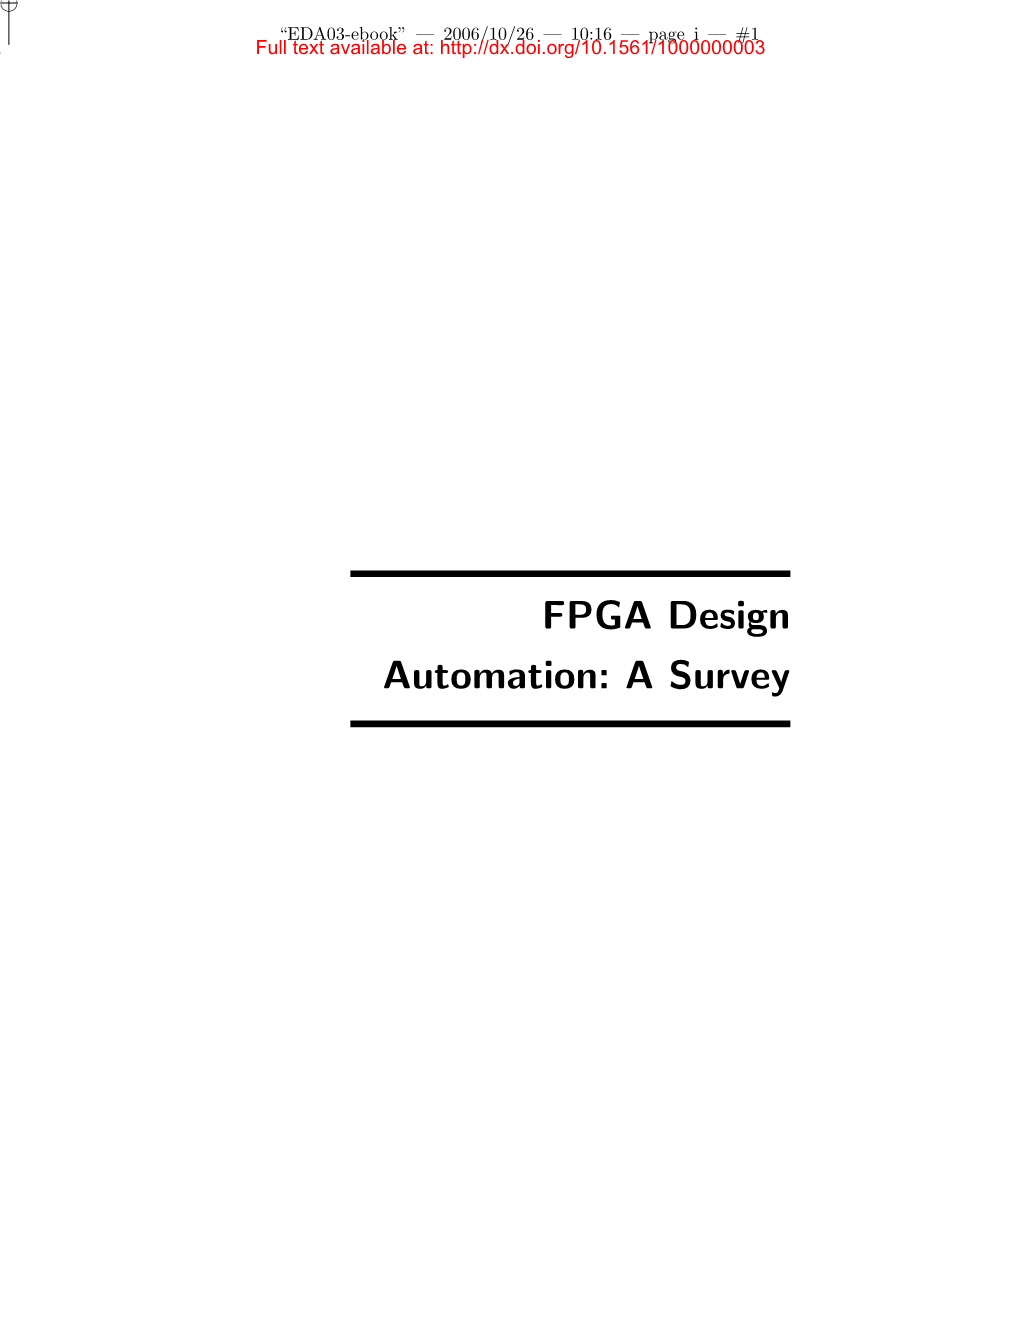 FPGA Design Automation: a Survey